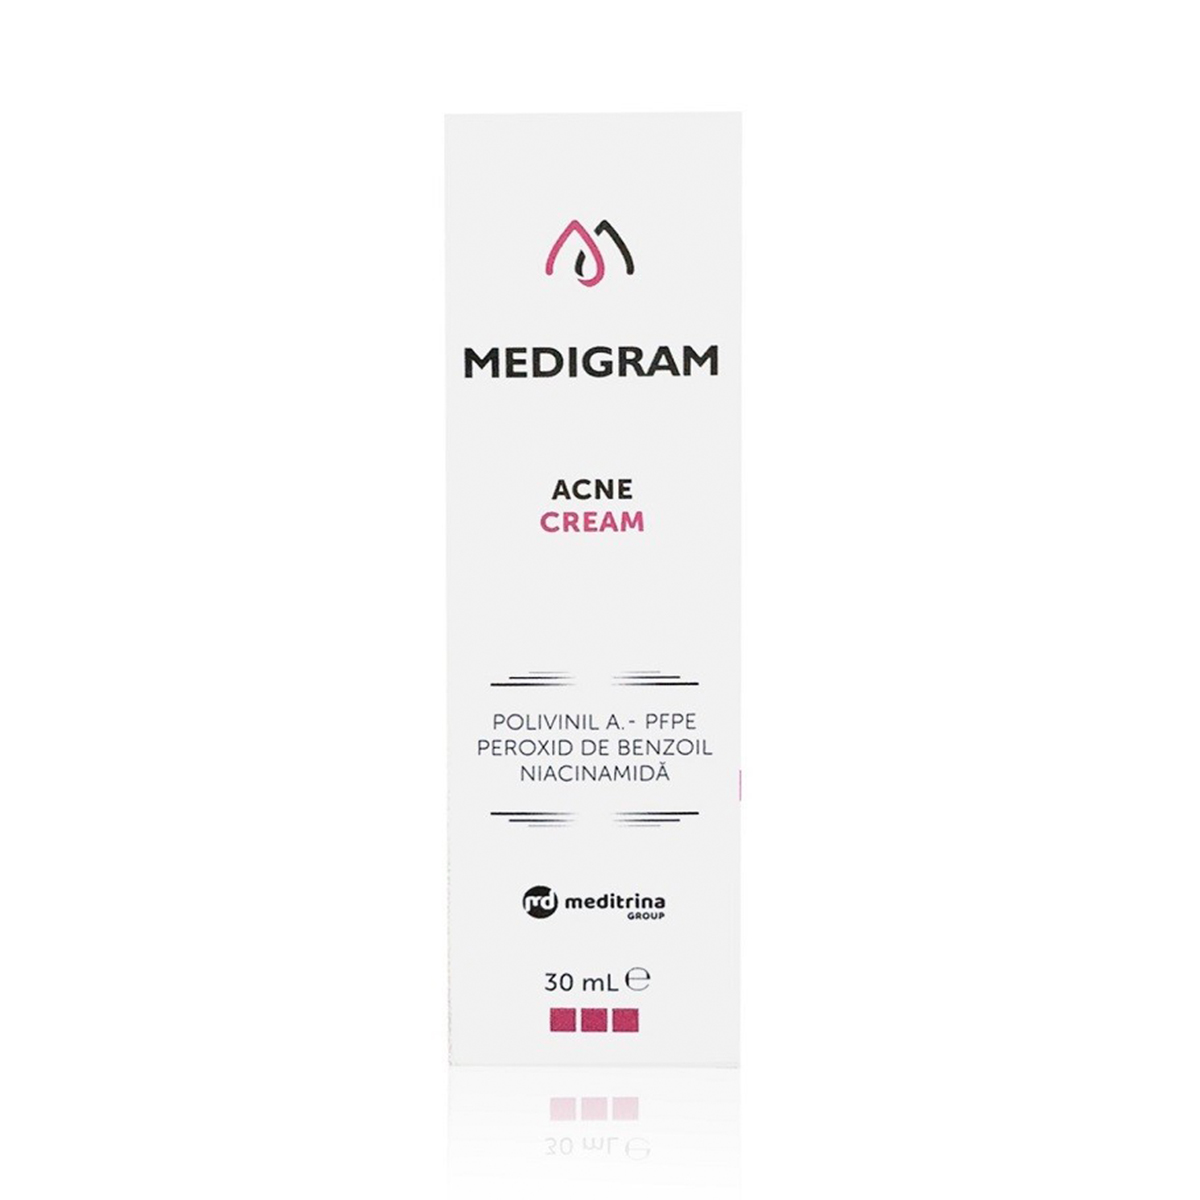 Ingrijire ten - Medigram crema, 30 ml, Meditrina, nordpharm.ro